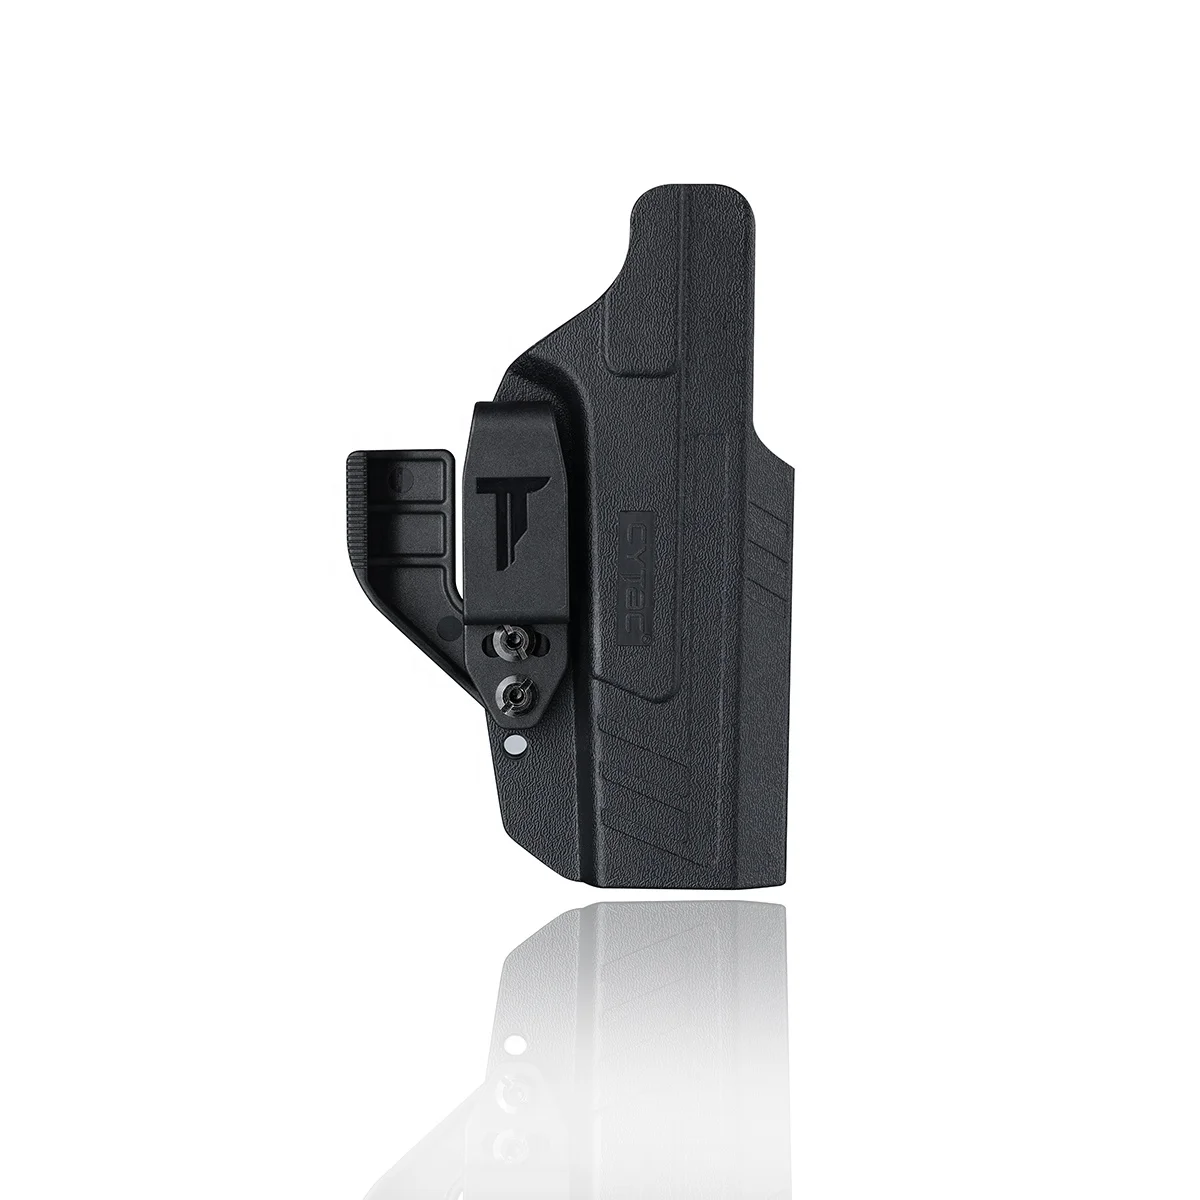 

Concealed Carry Cytac IWB Gun Holster for Glock 19/23/32/19X, Black